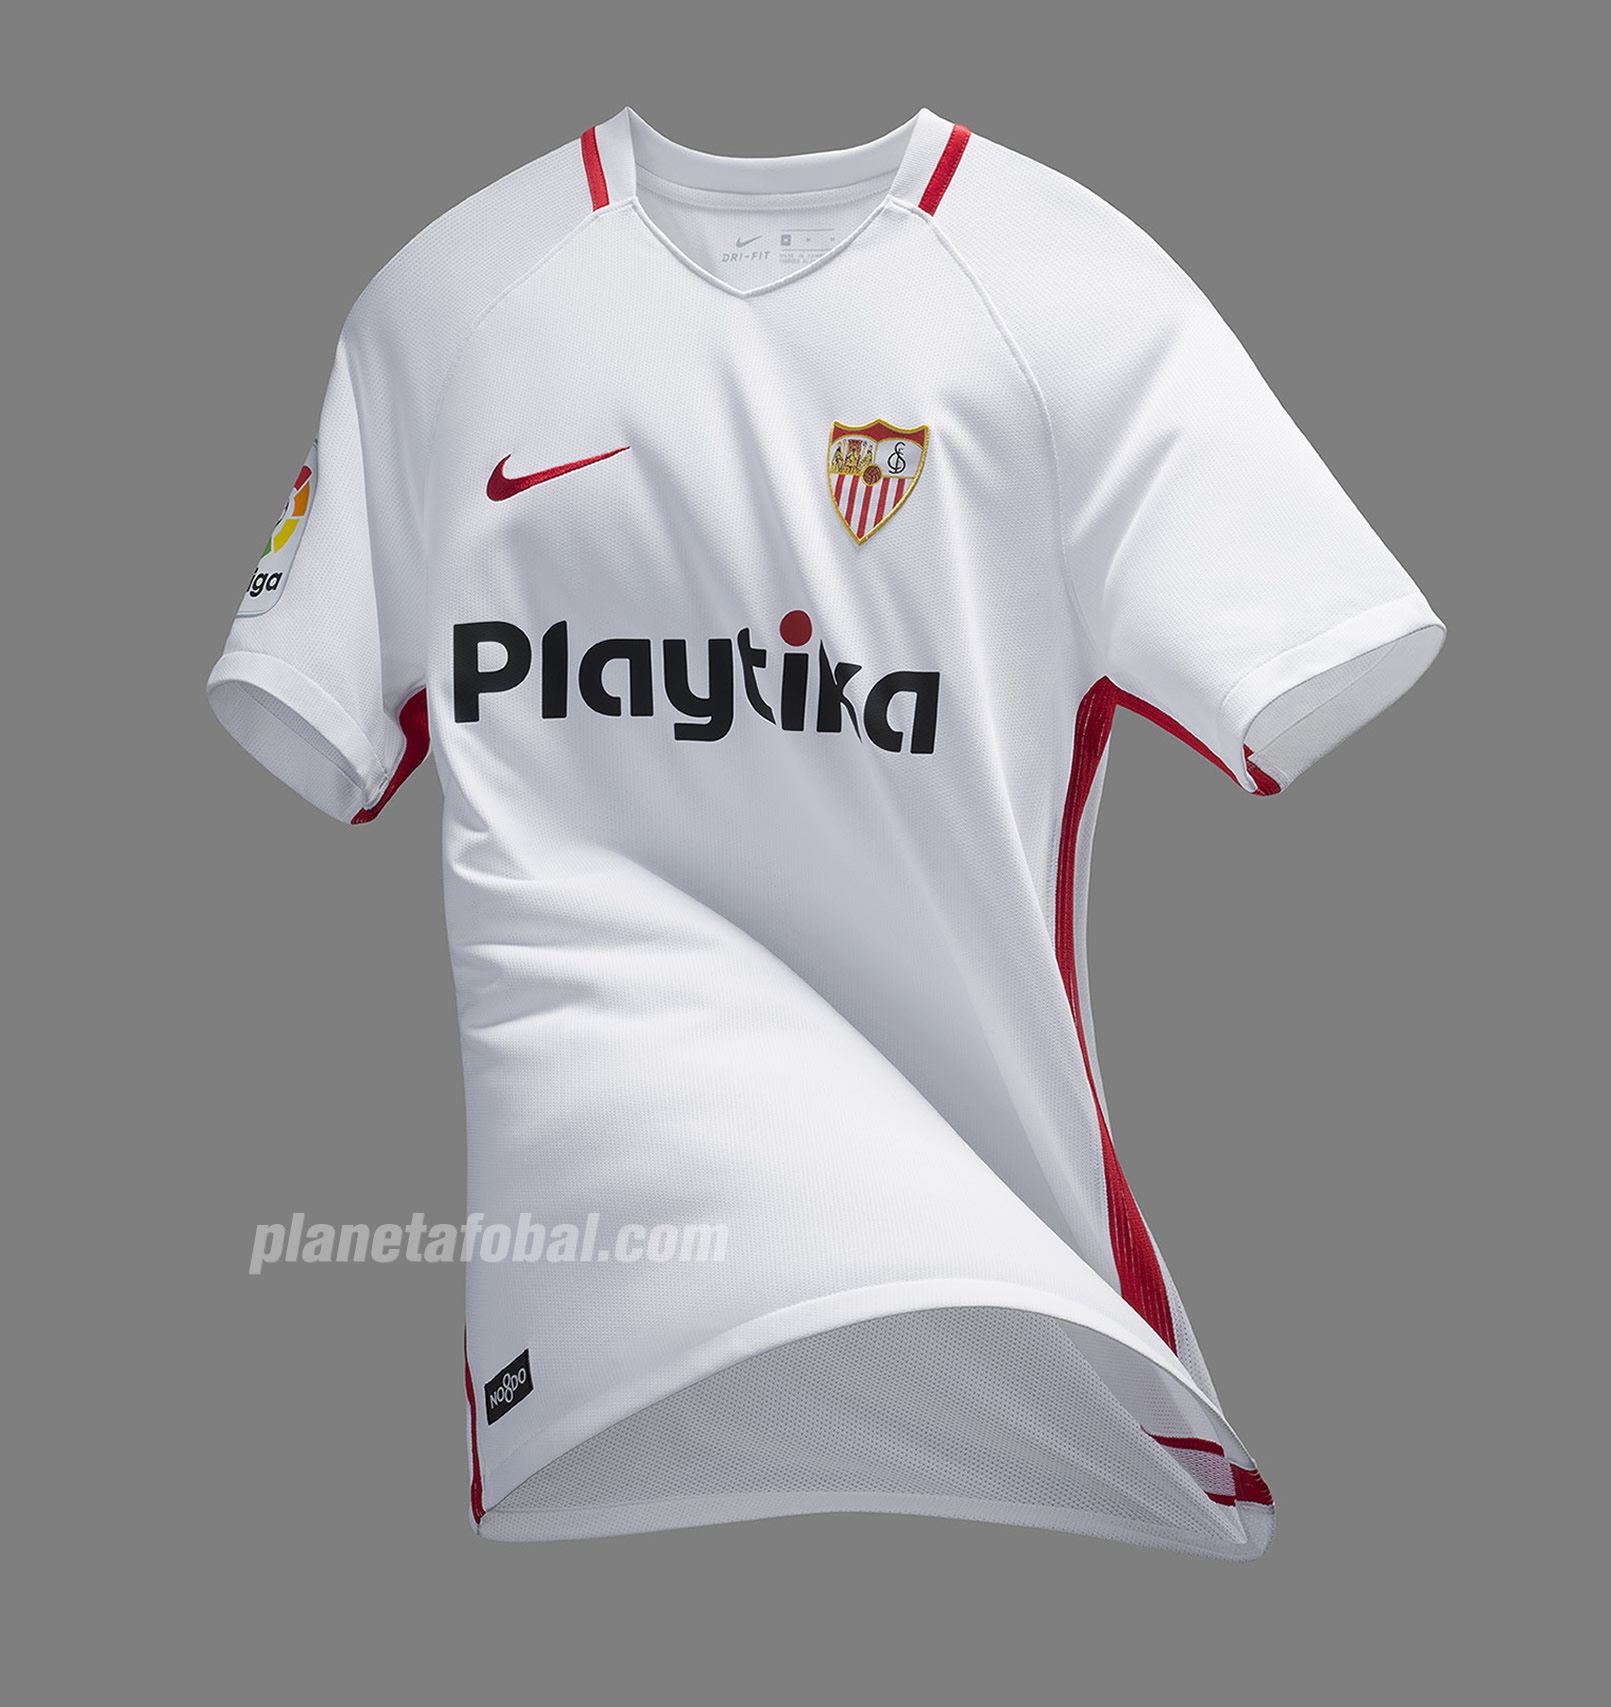 Nueva camiseta titular 2018/19 del Sevilla | Imagen Nike